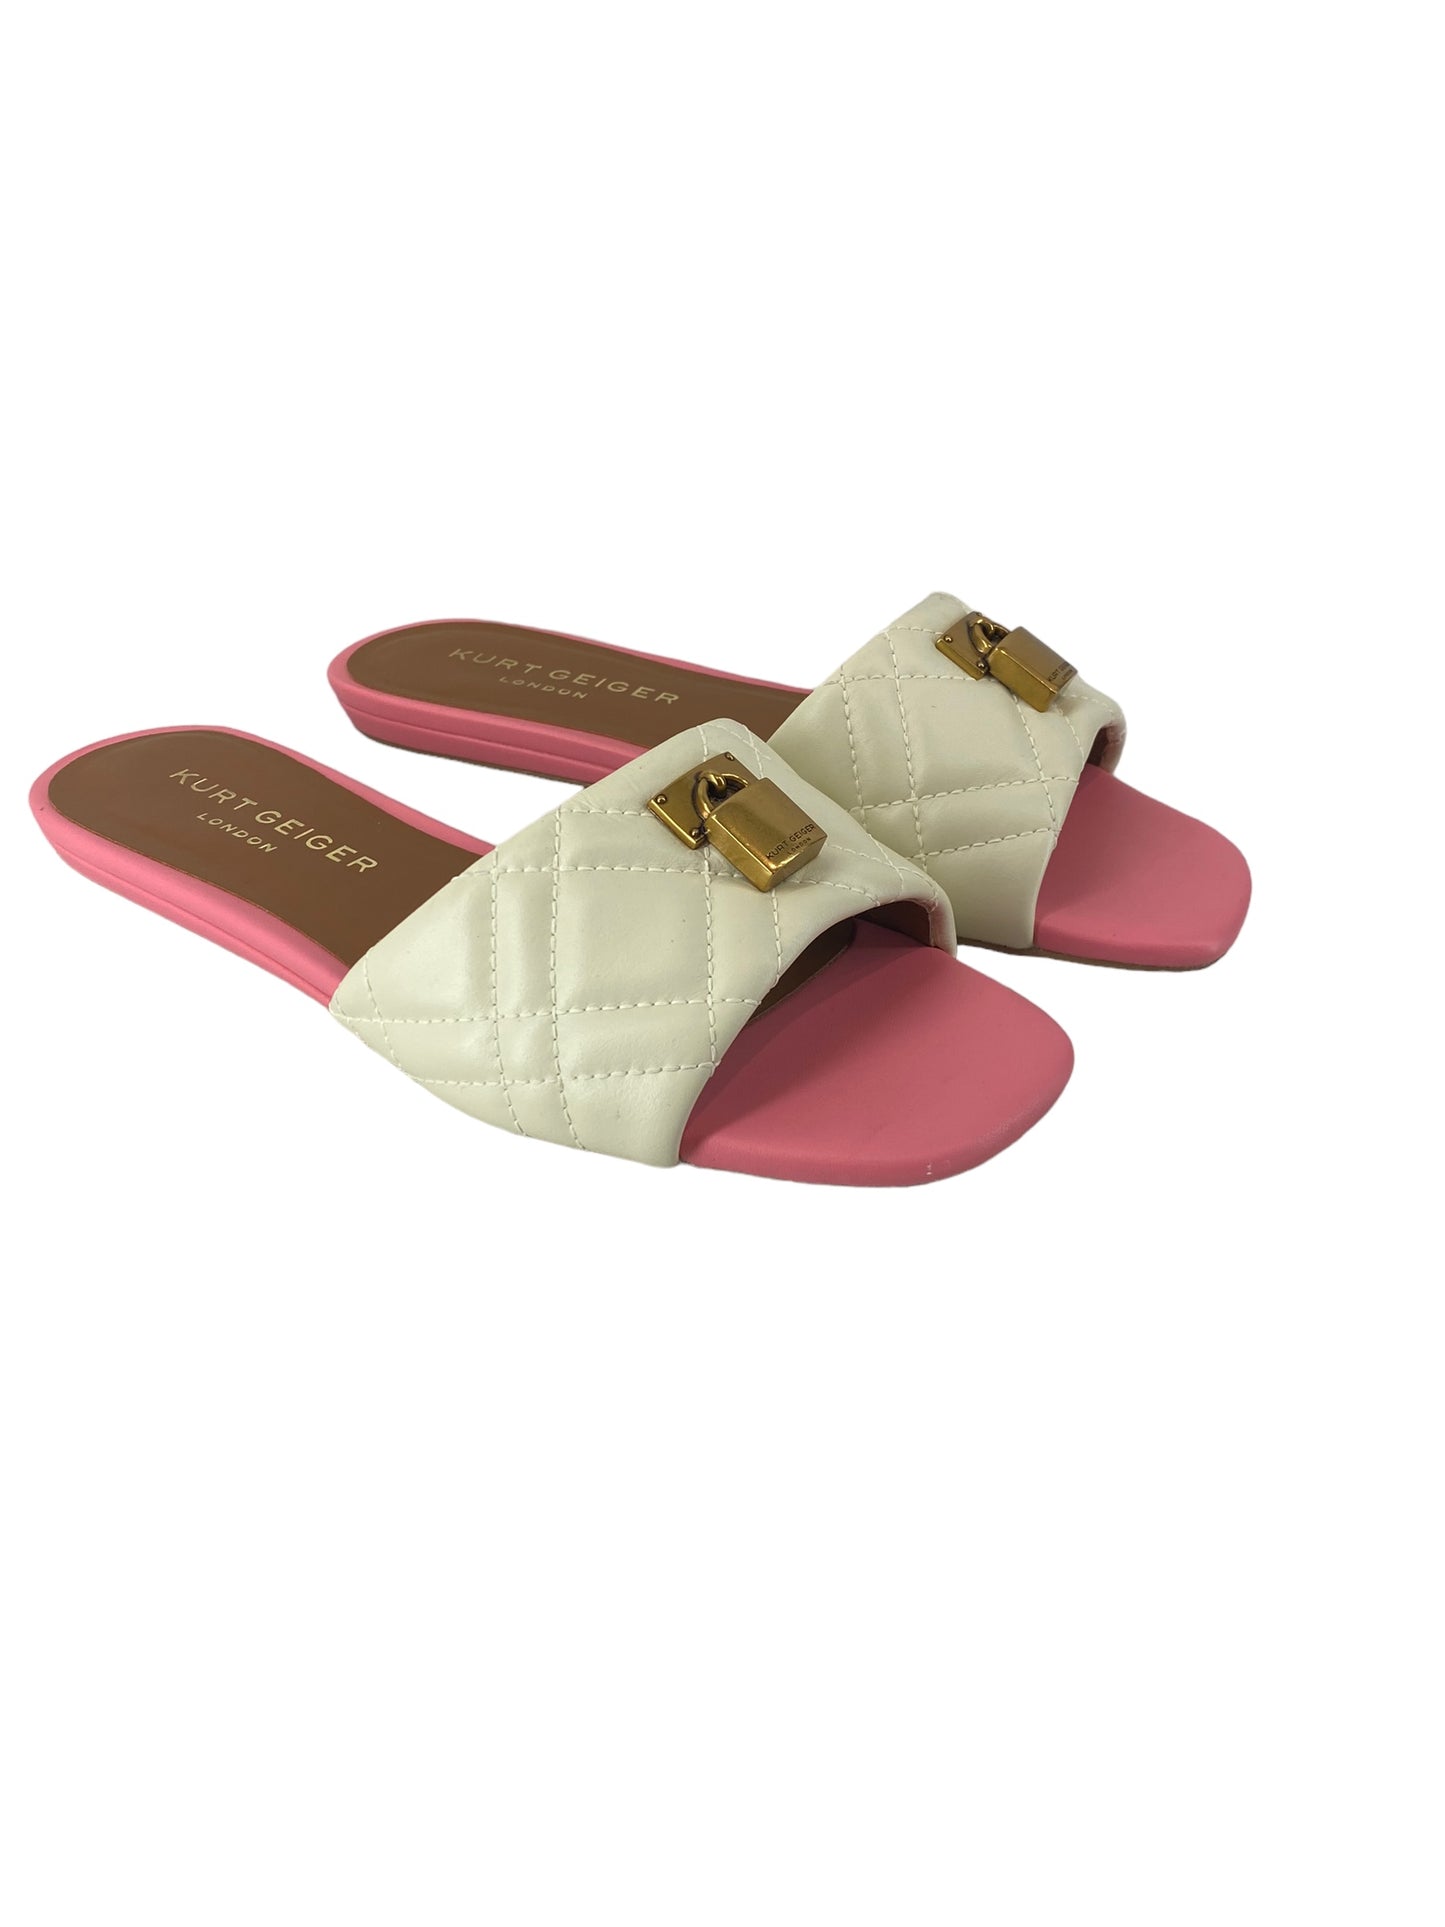 Sandals Designer By Kurt Geiger London  Size: 6.5